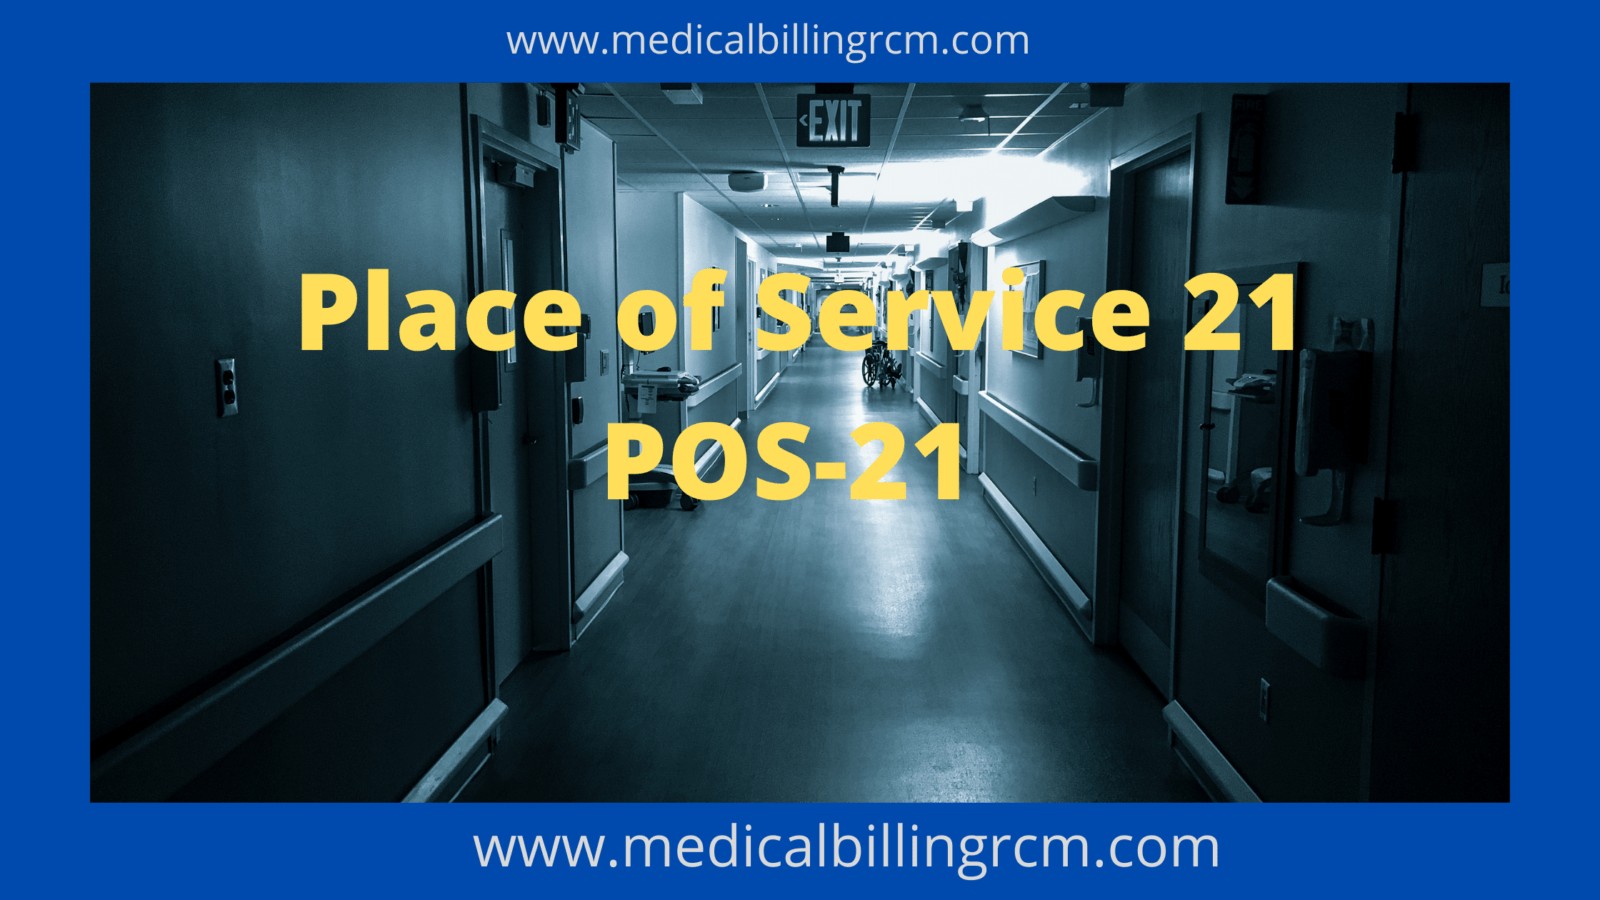 POS 21 in medical billing codes